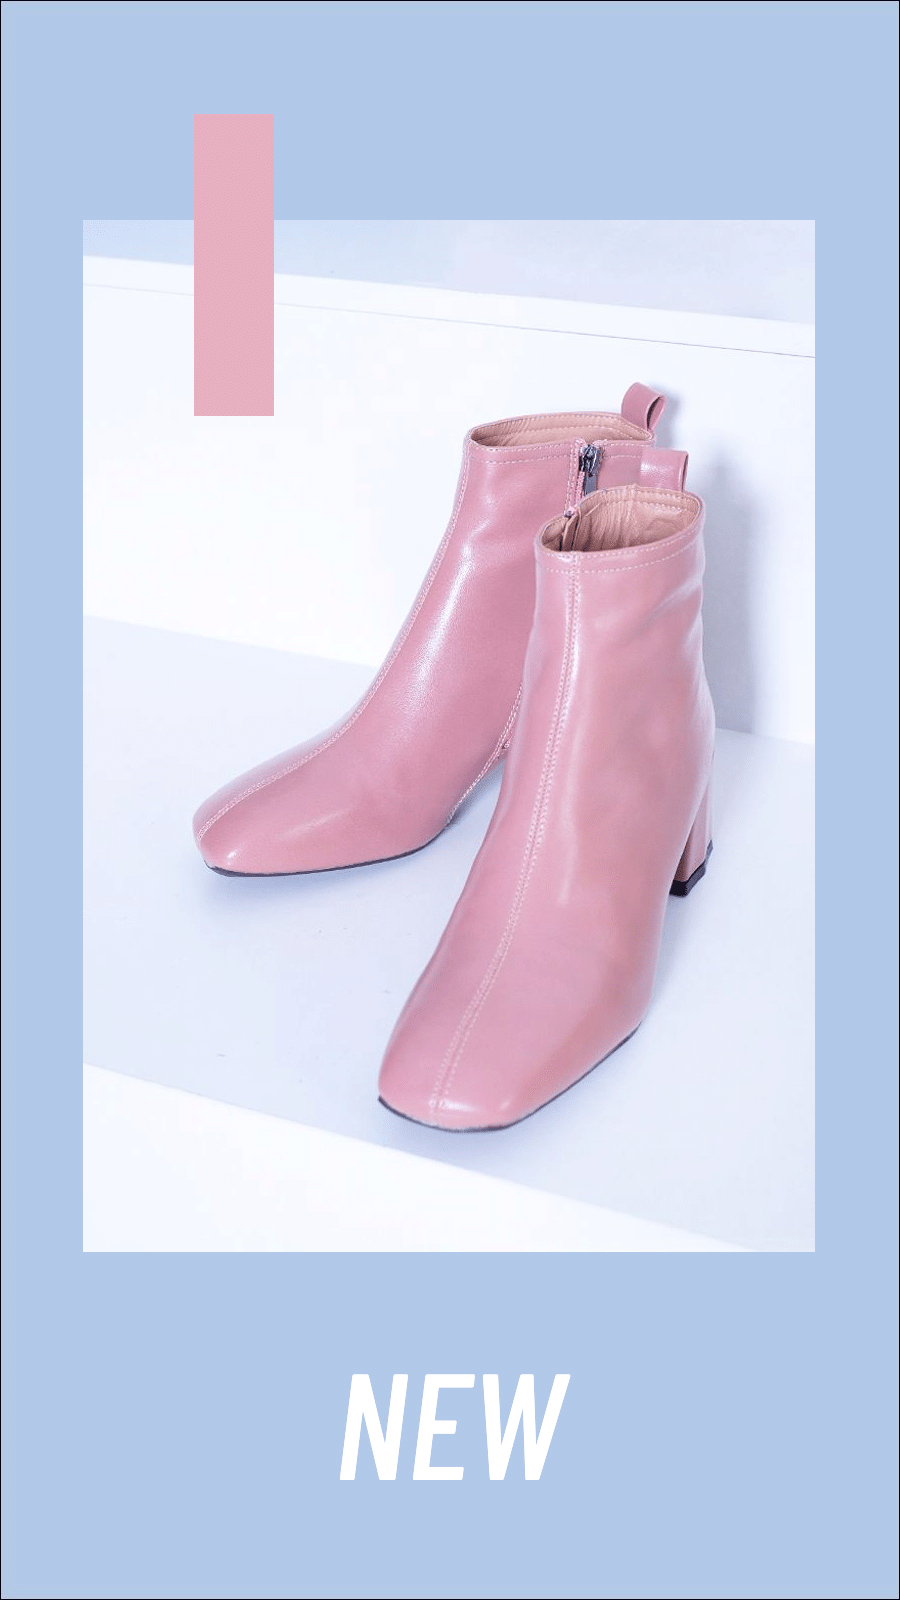 Minimalist Women's New Boots Display Instagram Story预览效果